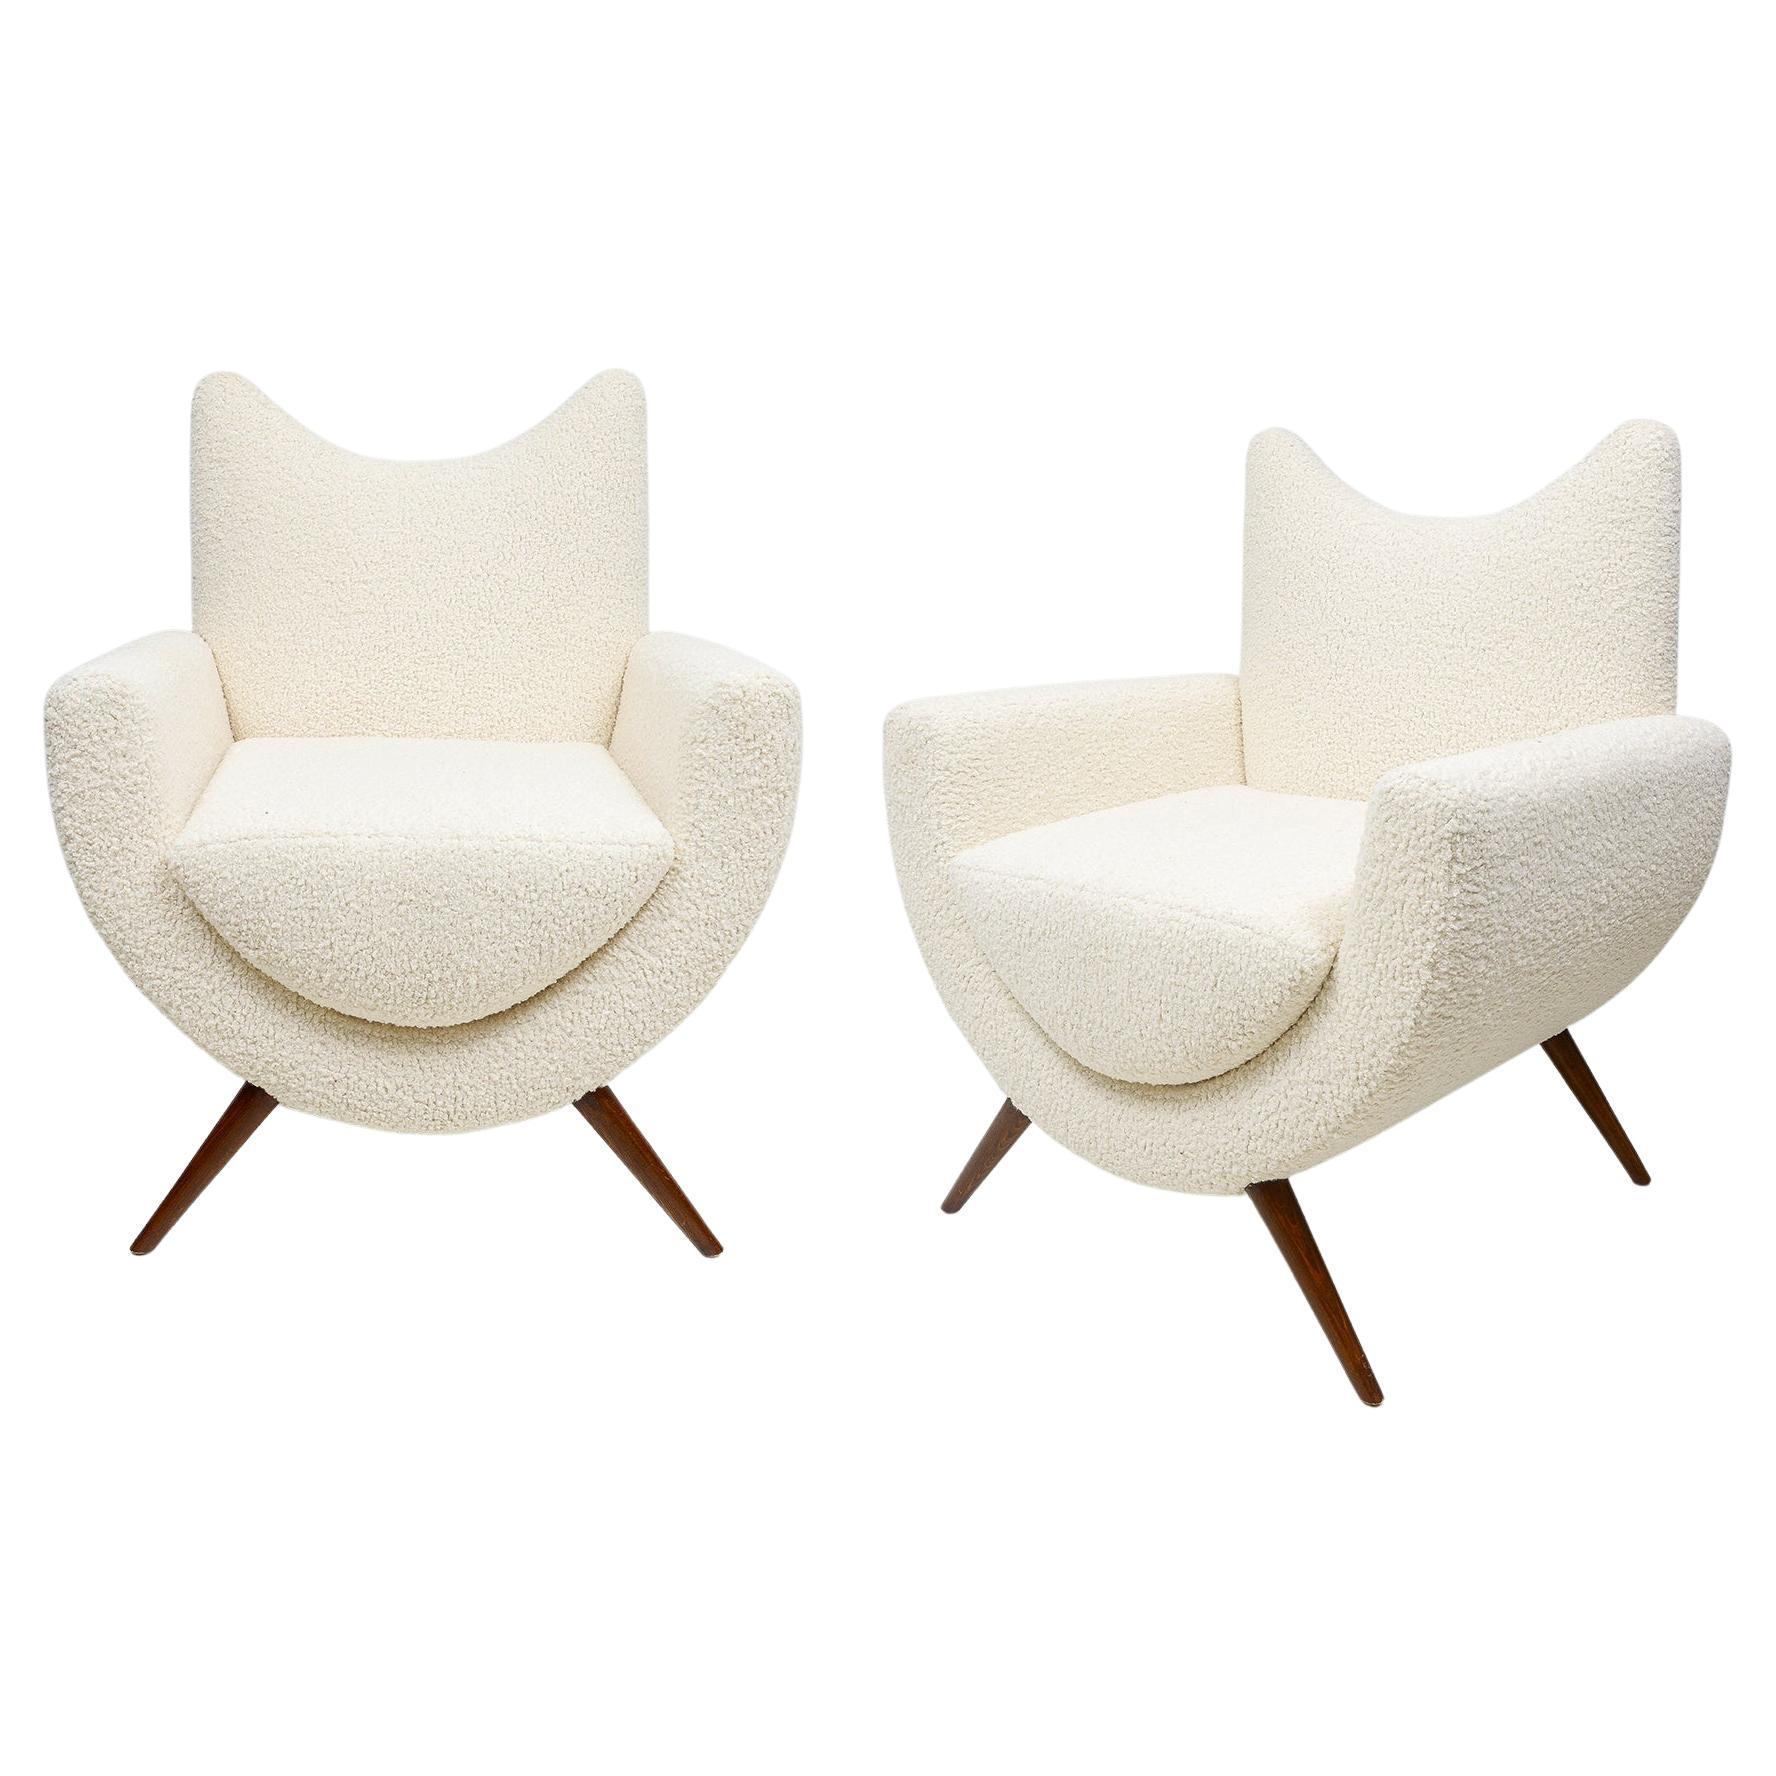 Sculptural Mid-Century Modern Italian Lounge Chairs